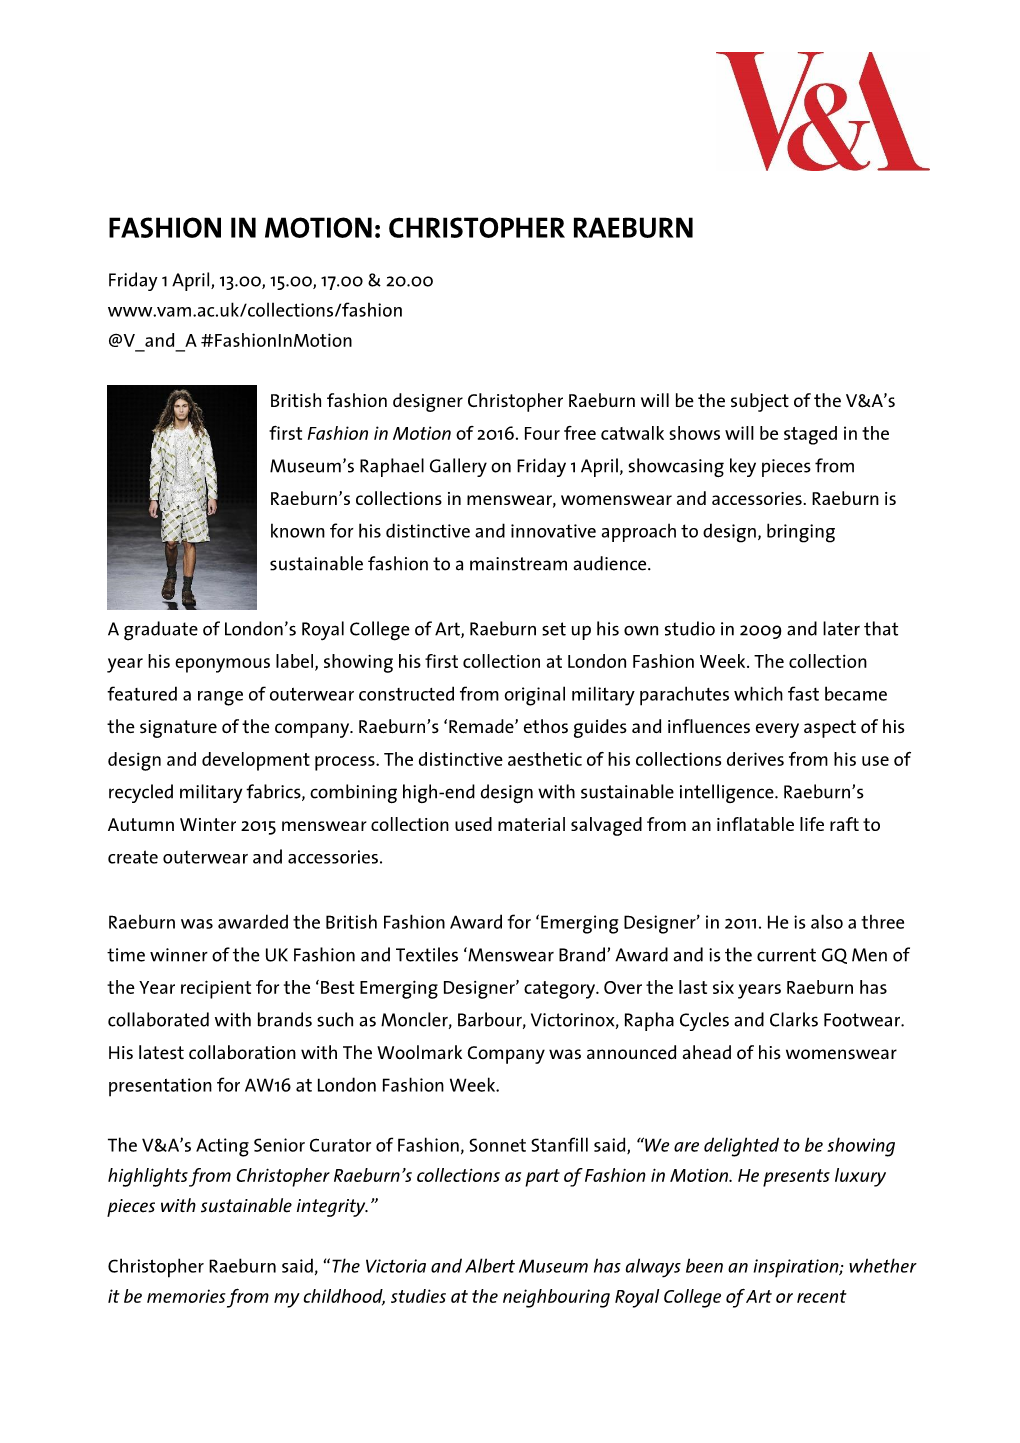 Fashion in Motion: Christopher Raeburn